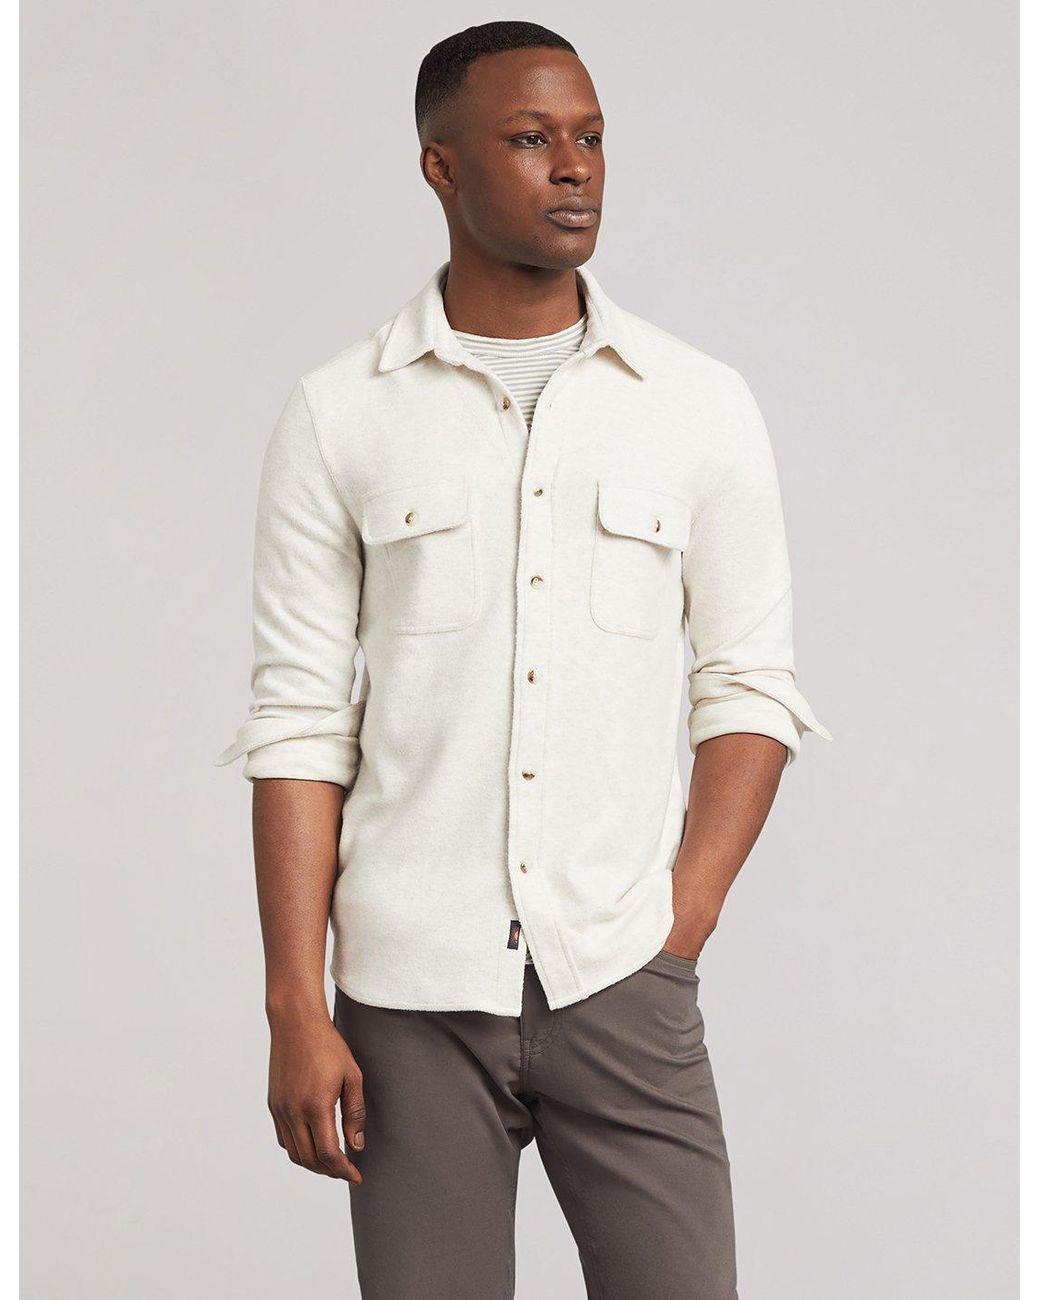 Faherty Brand Flannel Legendtm Sweater Shirt in White for Men - Lyst